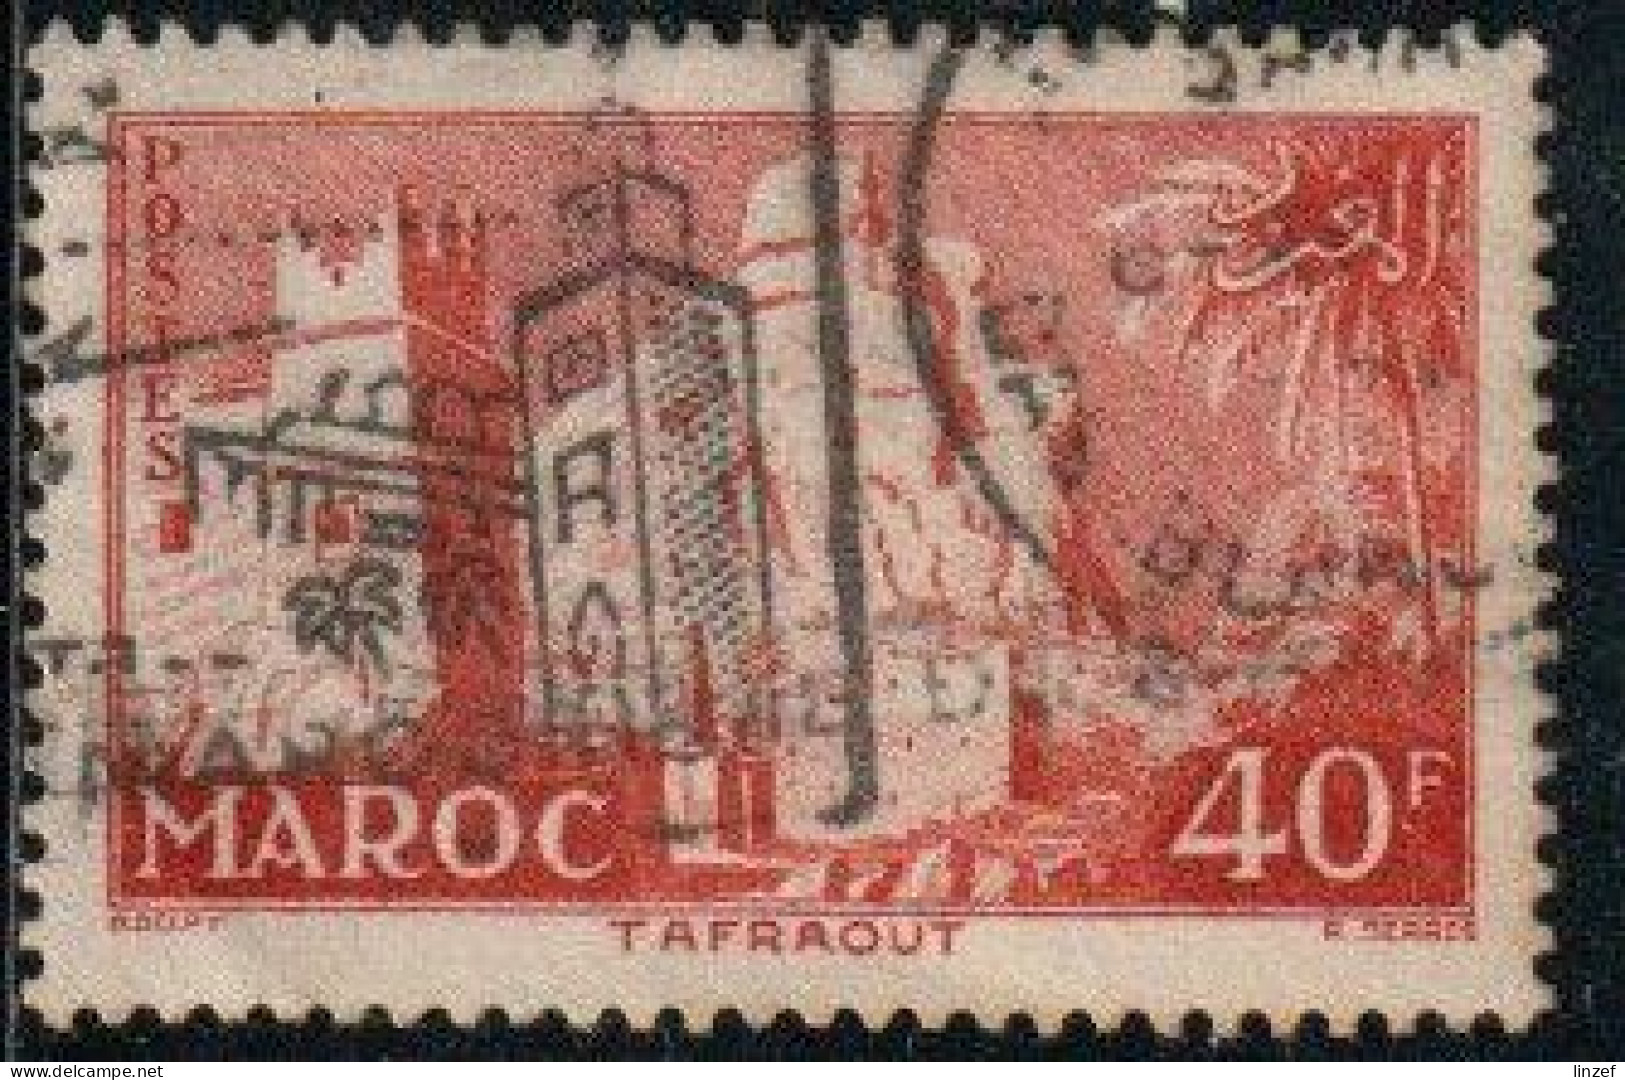 Maroc 1955 Yv. N°359 - 40f Rouge-brun Tafraout - Oblitéré - Used Stamps